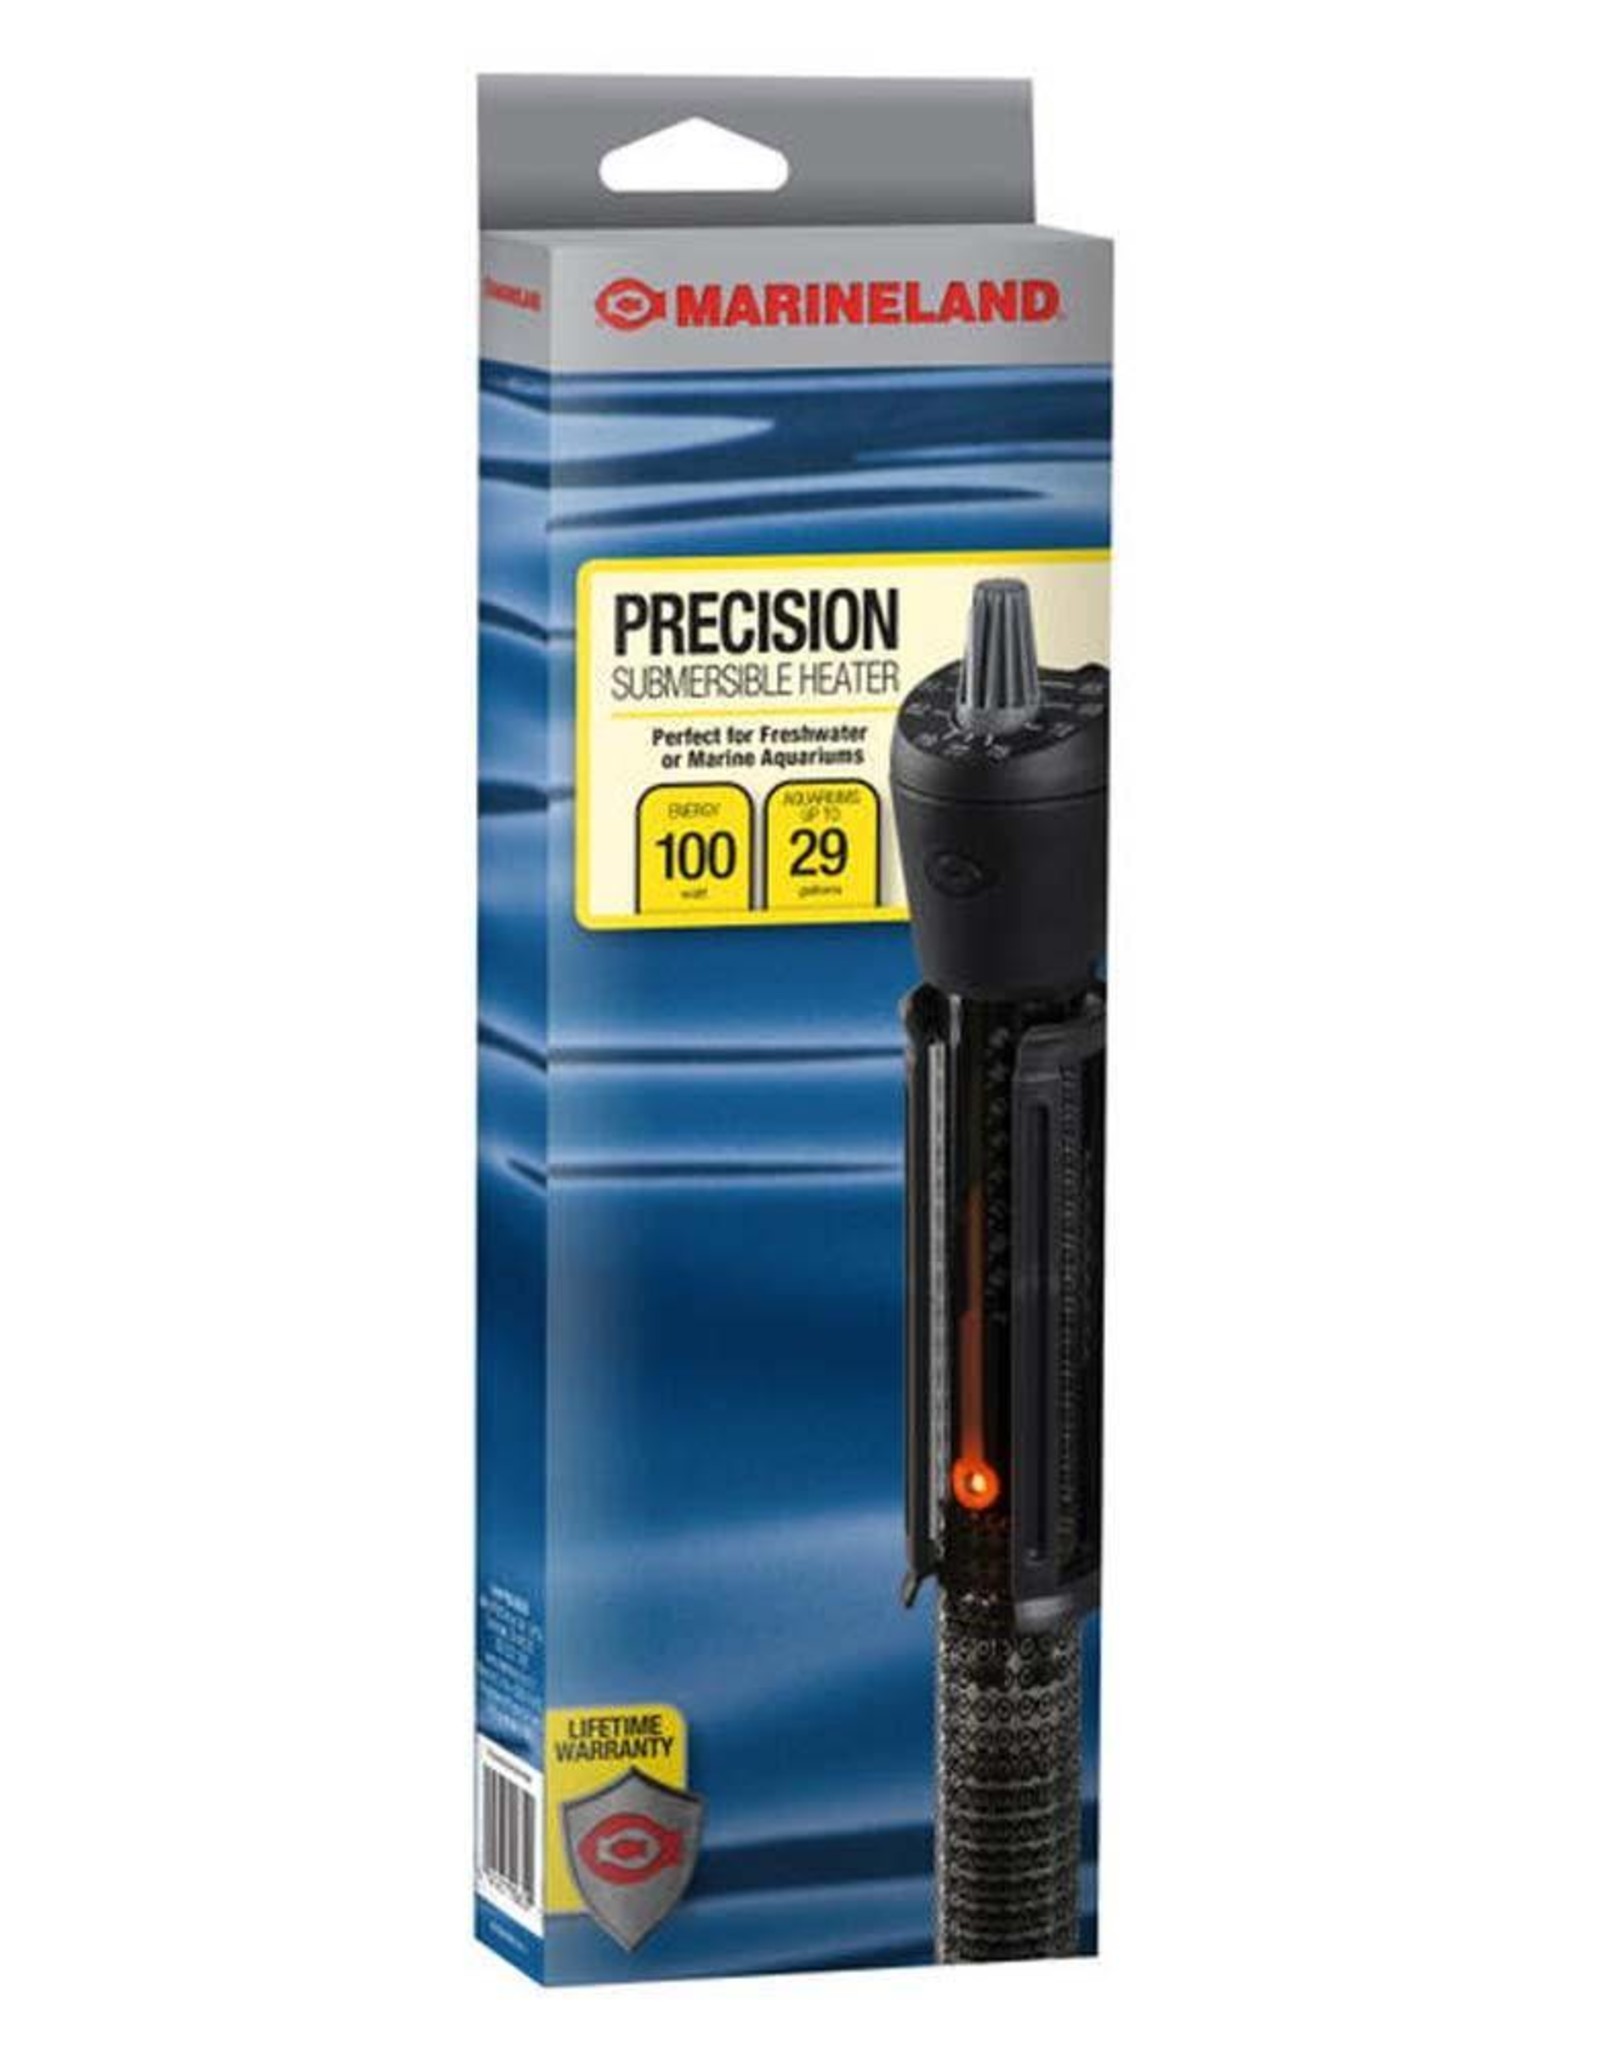 SPECTRUM BRANDS AQA Marineland Precision 100 Watt Submersible Heater